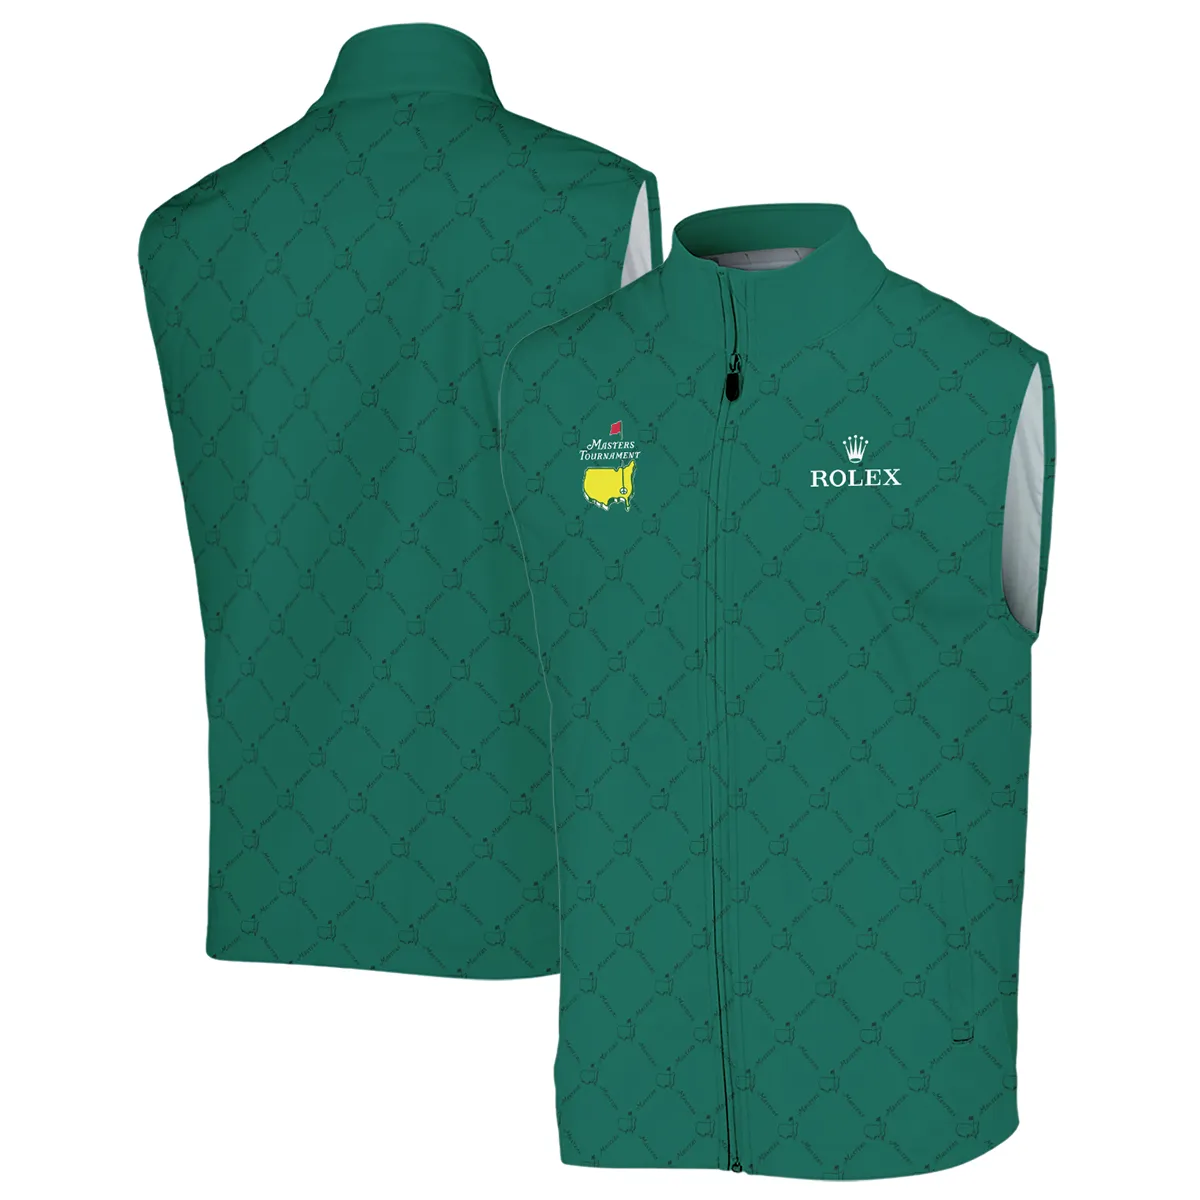 Golf Sport Pattern Color Green Mix Black Masters Tournament Rolex Quarter-Zip Jacket Style Classic